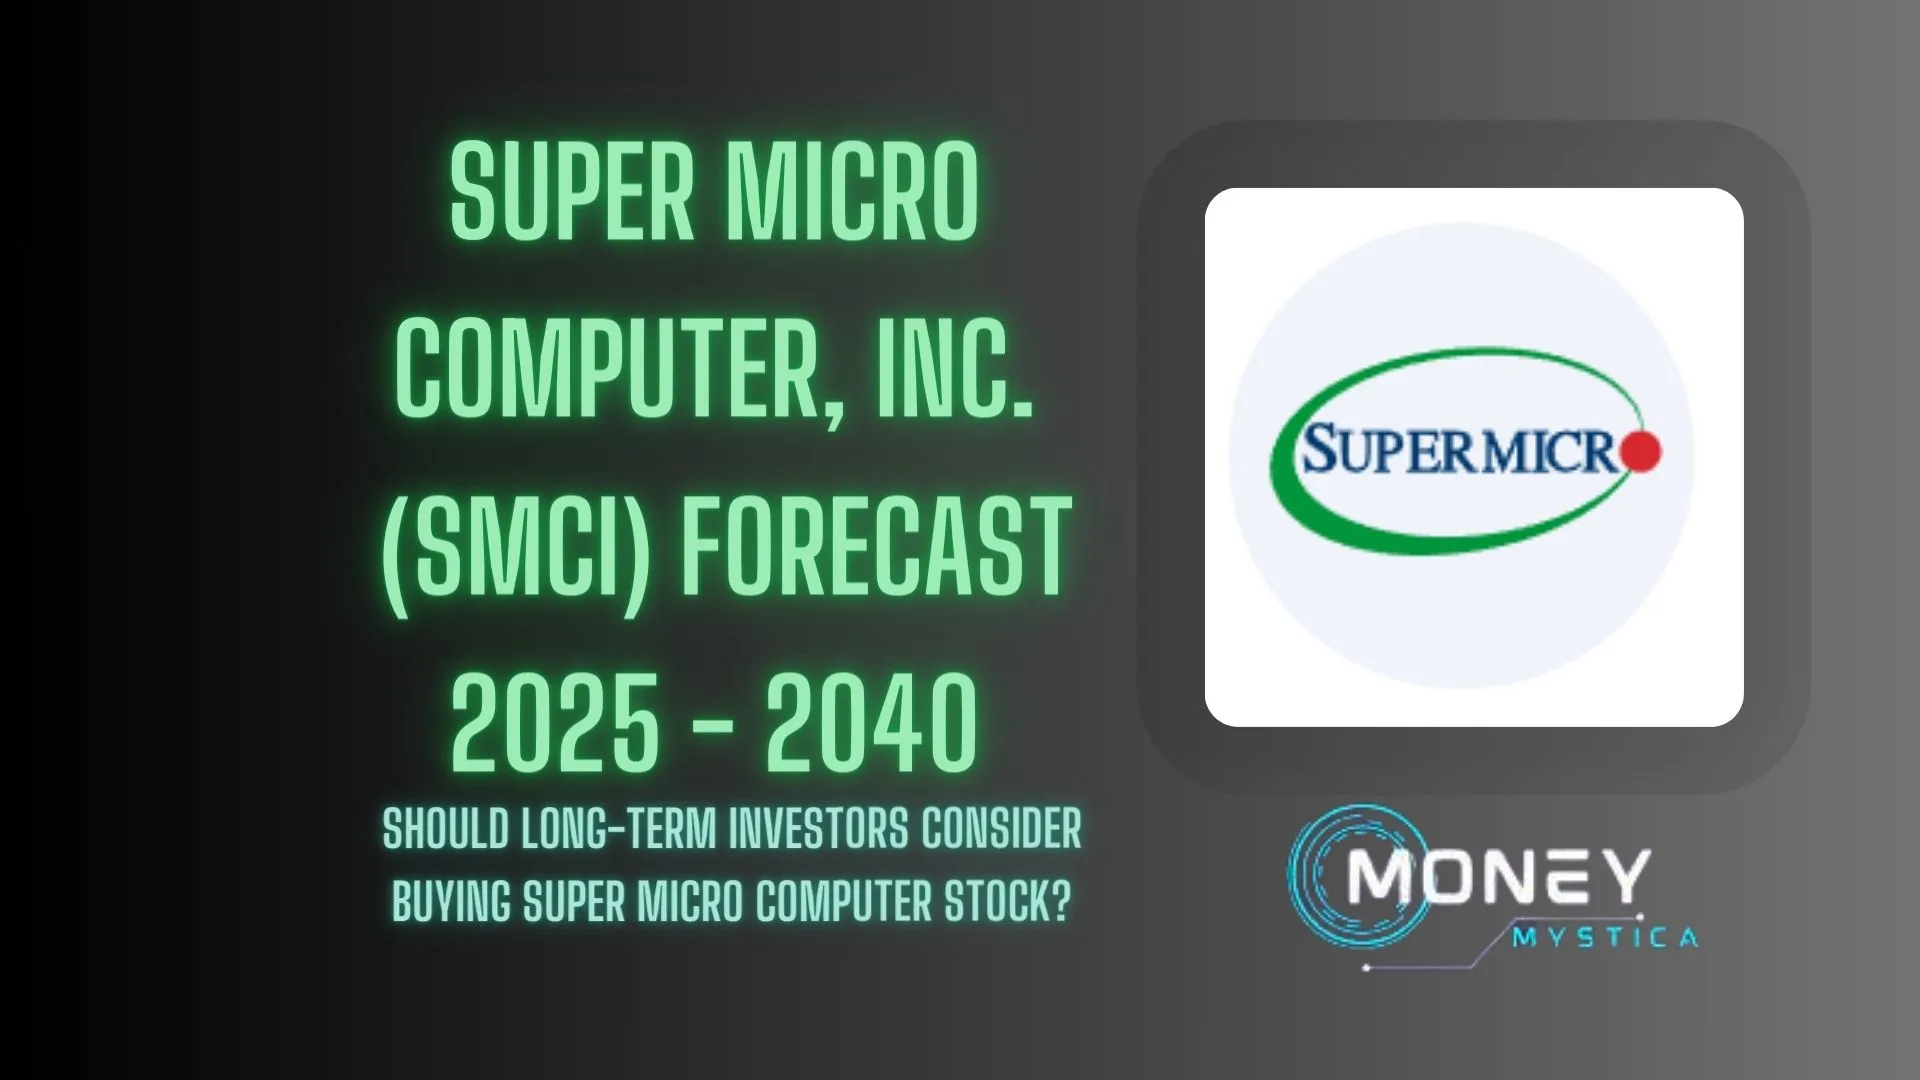 Should Long-Term Investors Consider Buying Super Micro Computer Stock